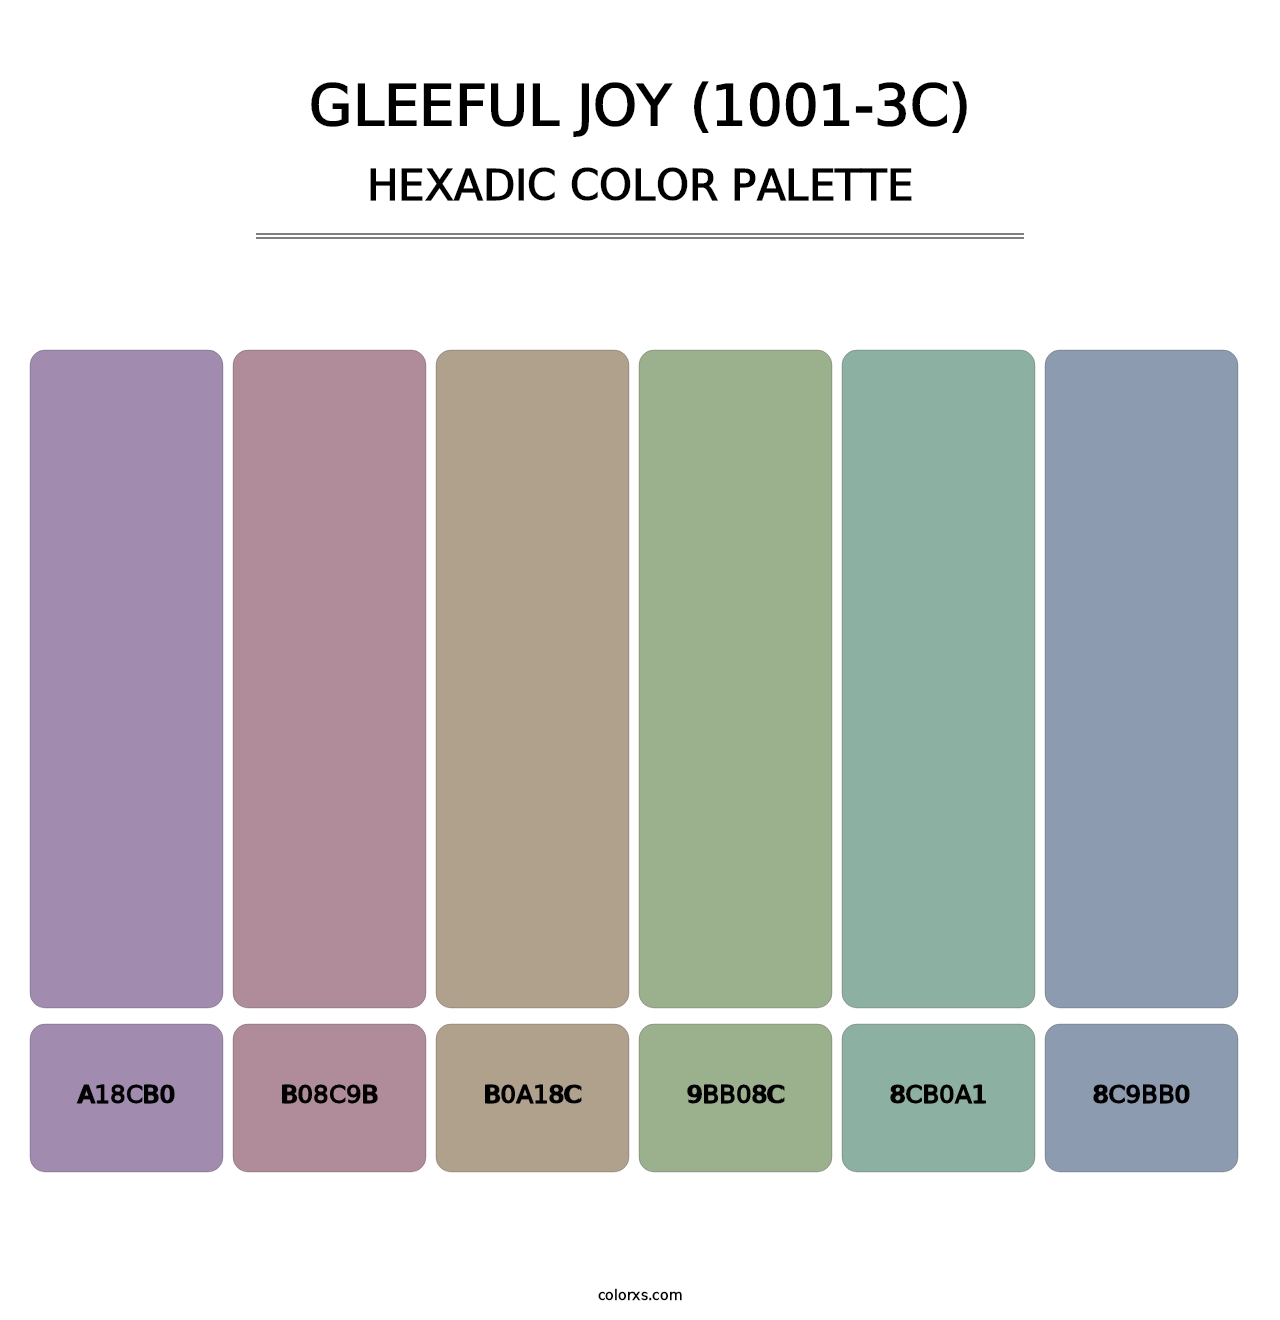 Gleeful Joy (1001-3C) - Hexadic Color Palette